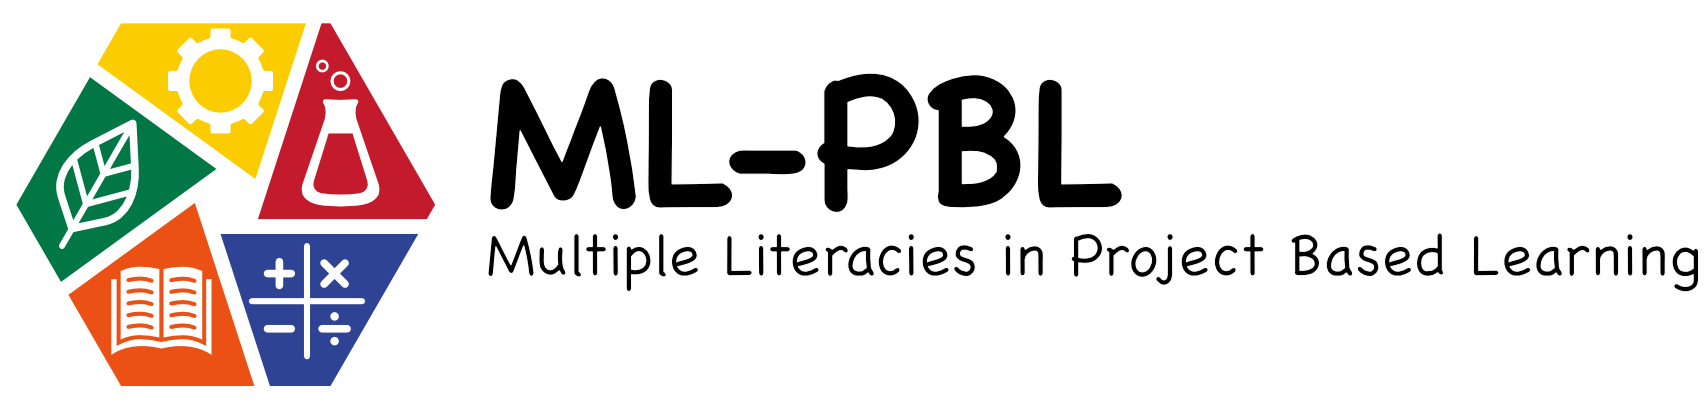 MLPBL Logo